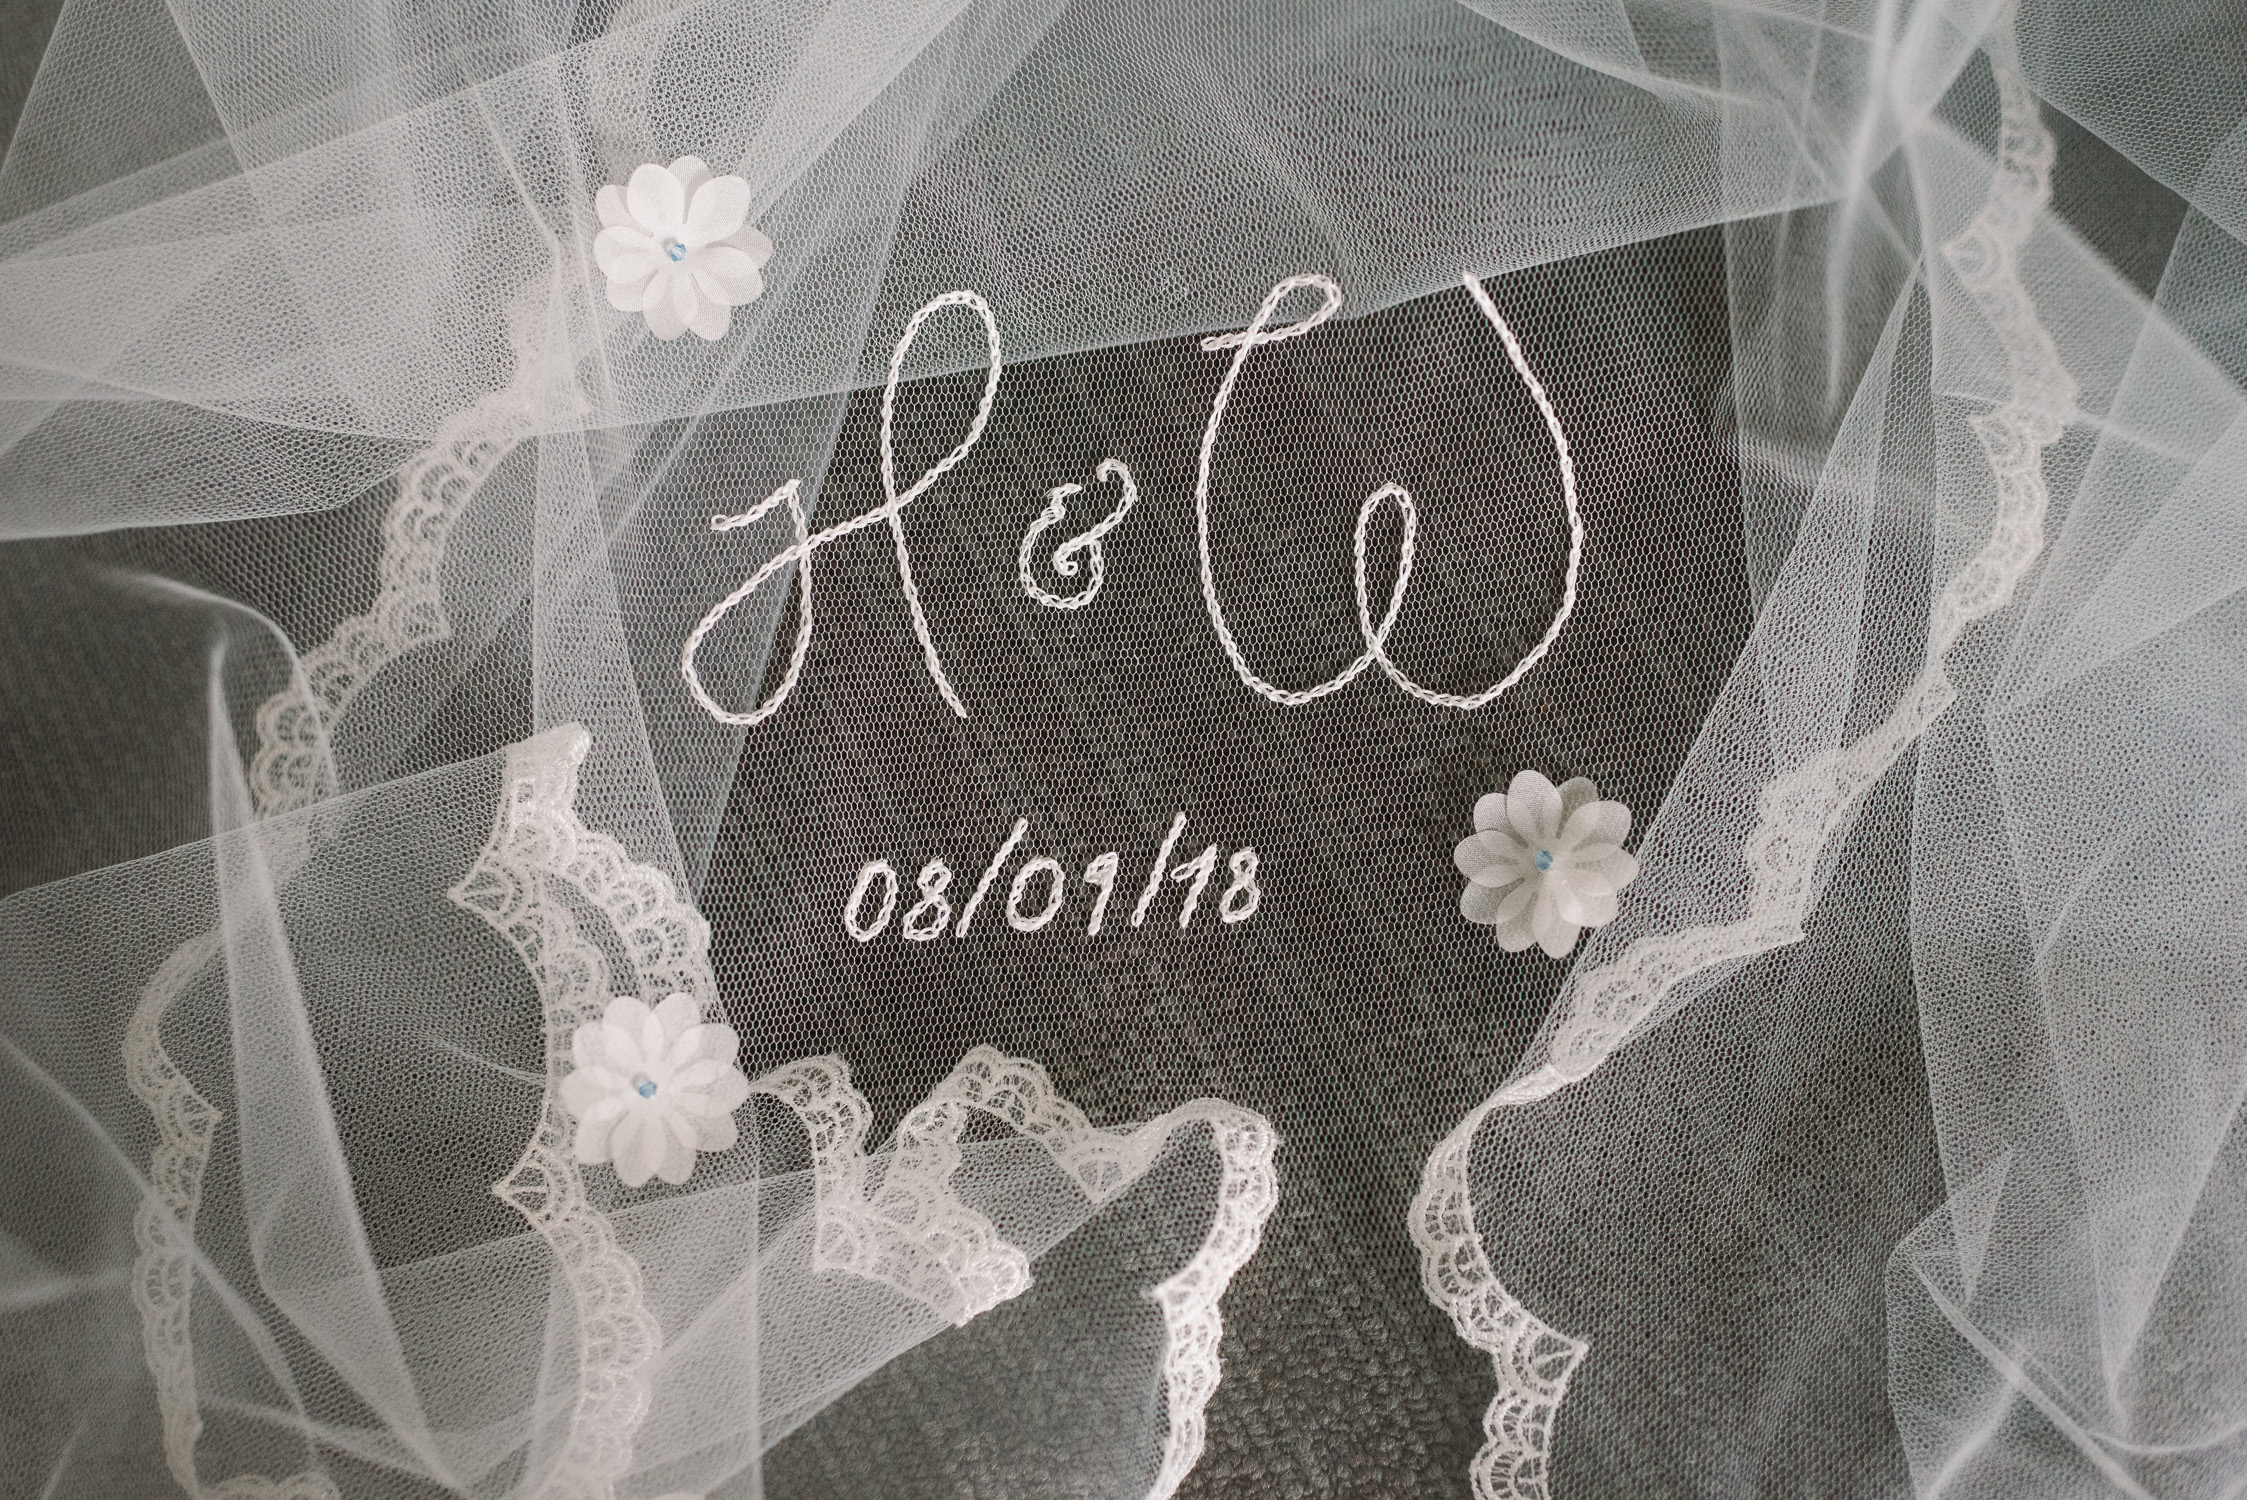 bride and groom's initials on wedding veil